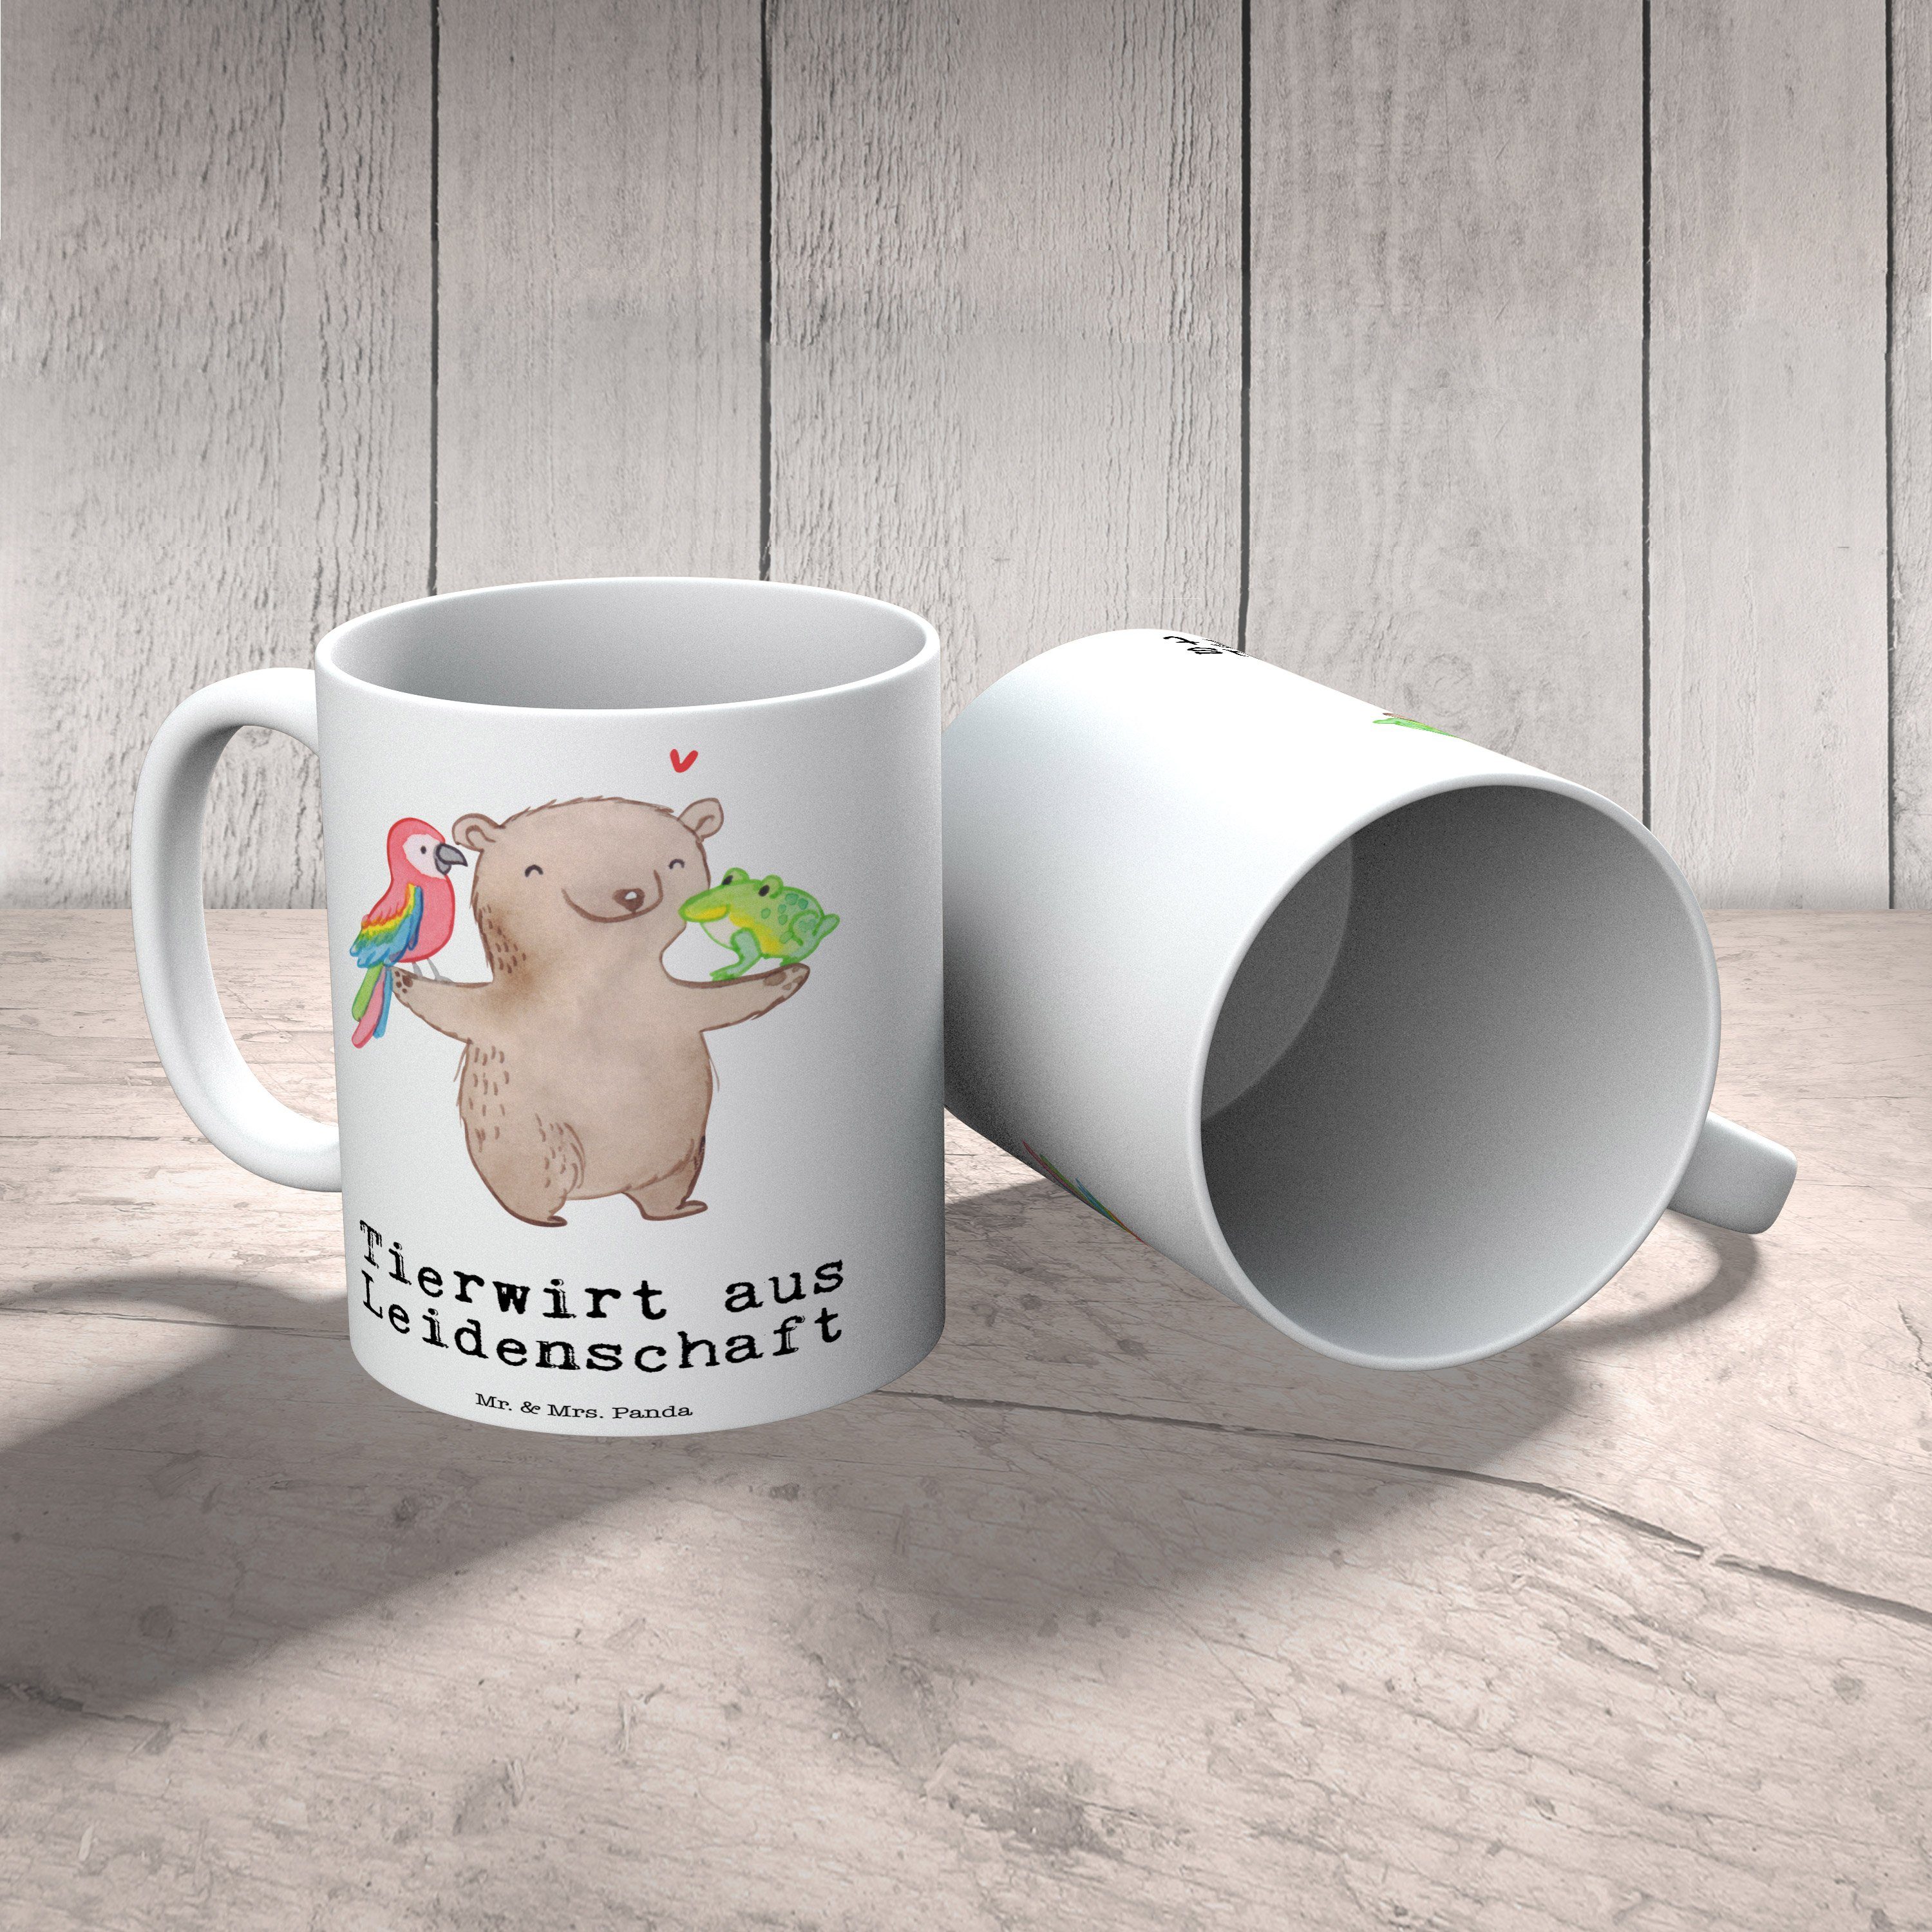 Mr. & Panda Geschenk, Mrs. Weiß - - Tasse Kolleg, Tierwirt Keramik Farmer, aus Leidenschaft Teetasse